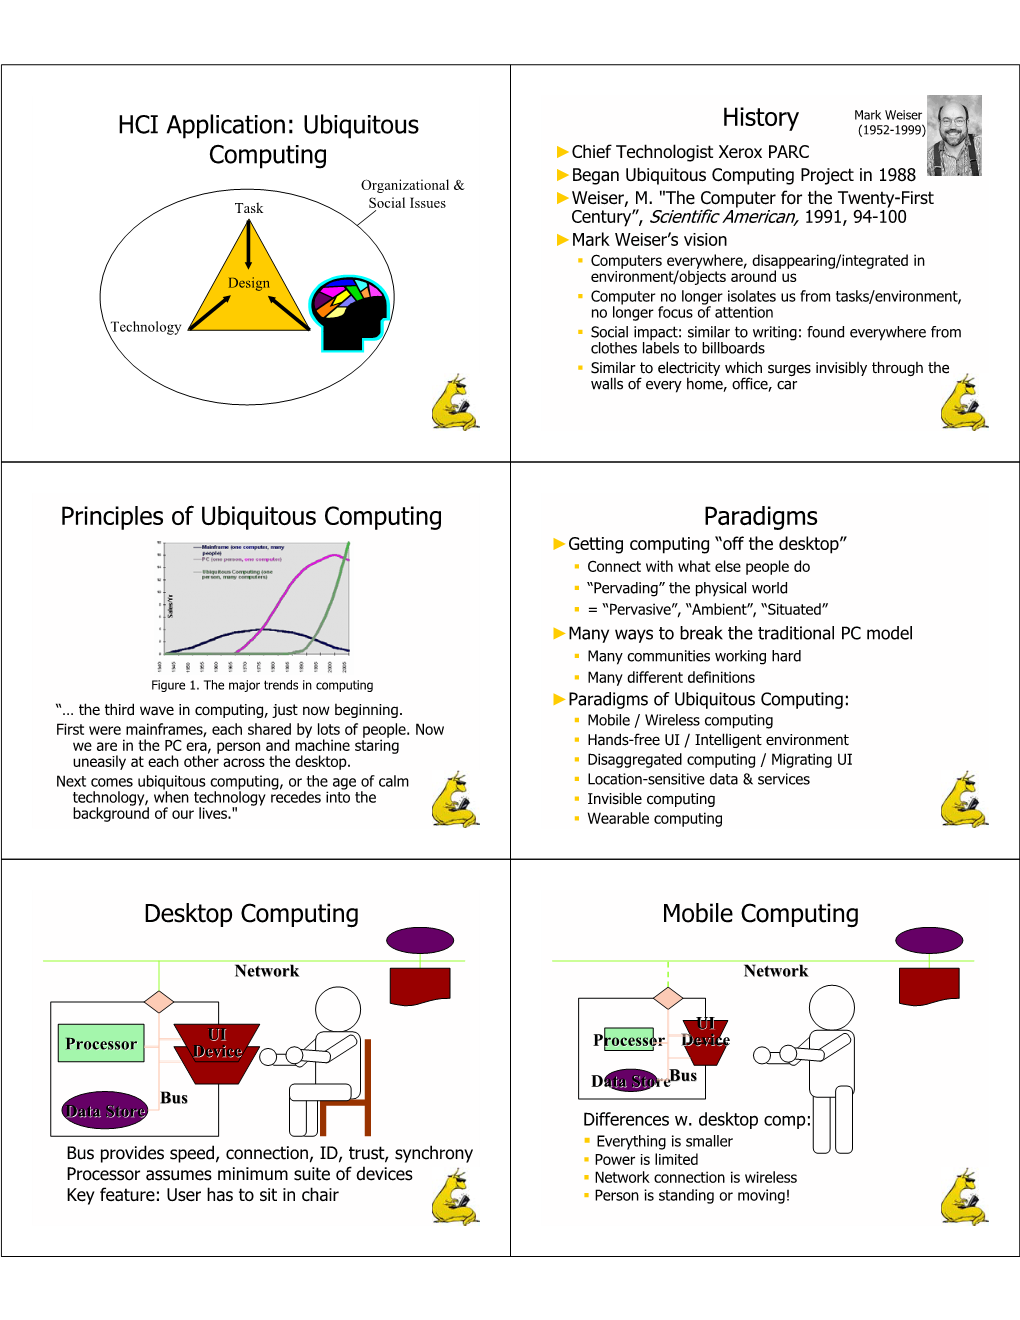 HCI Application: Ubiquitous Computing History Principles of Ubiquitous Computing Paradigms Desktop Computing Mobile Computing